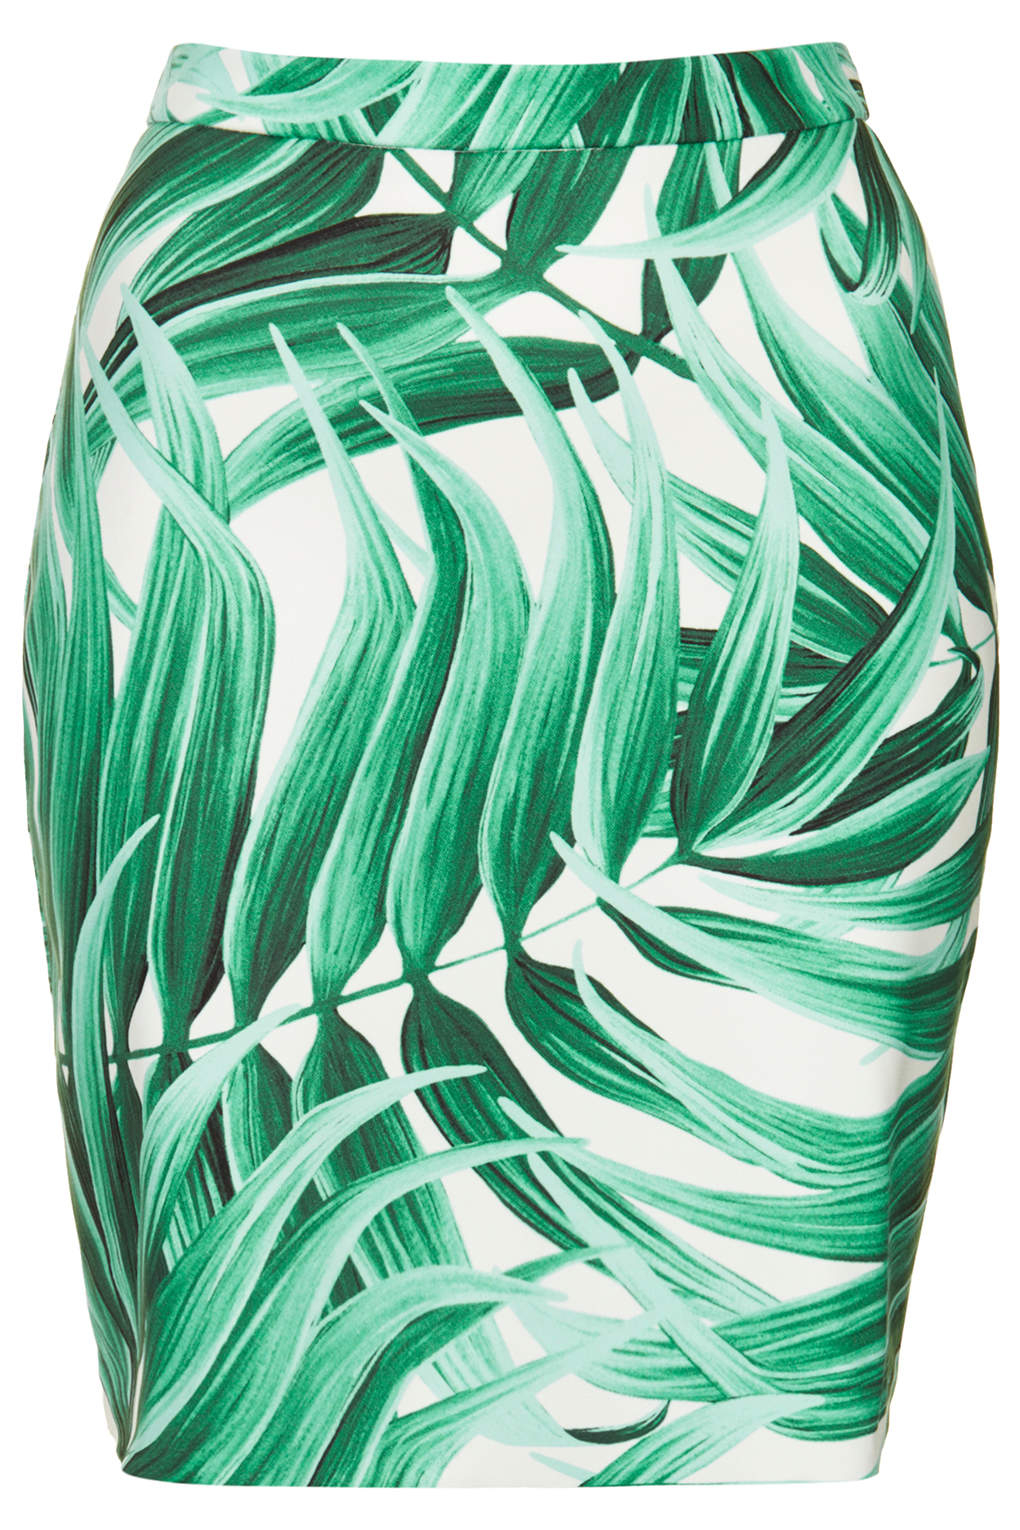 Lyst - Topshop Tropical Leaf Print Pencil Skirt in Green